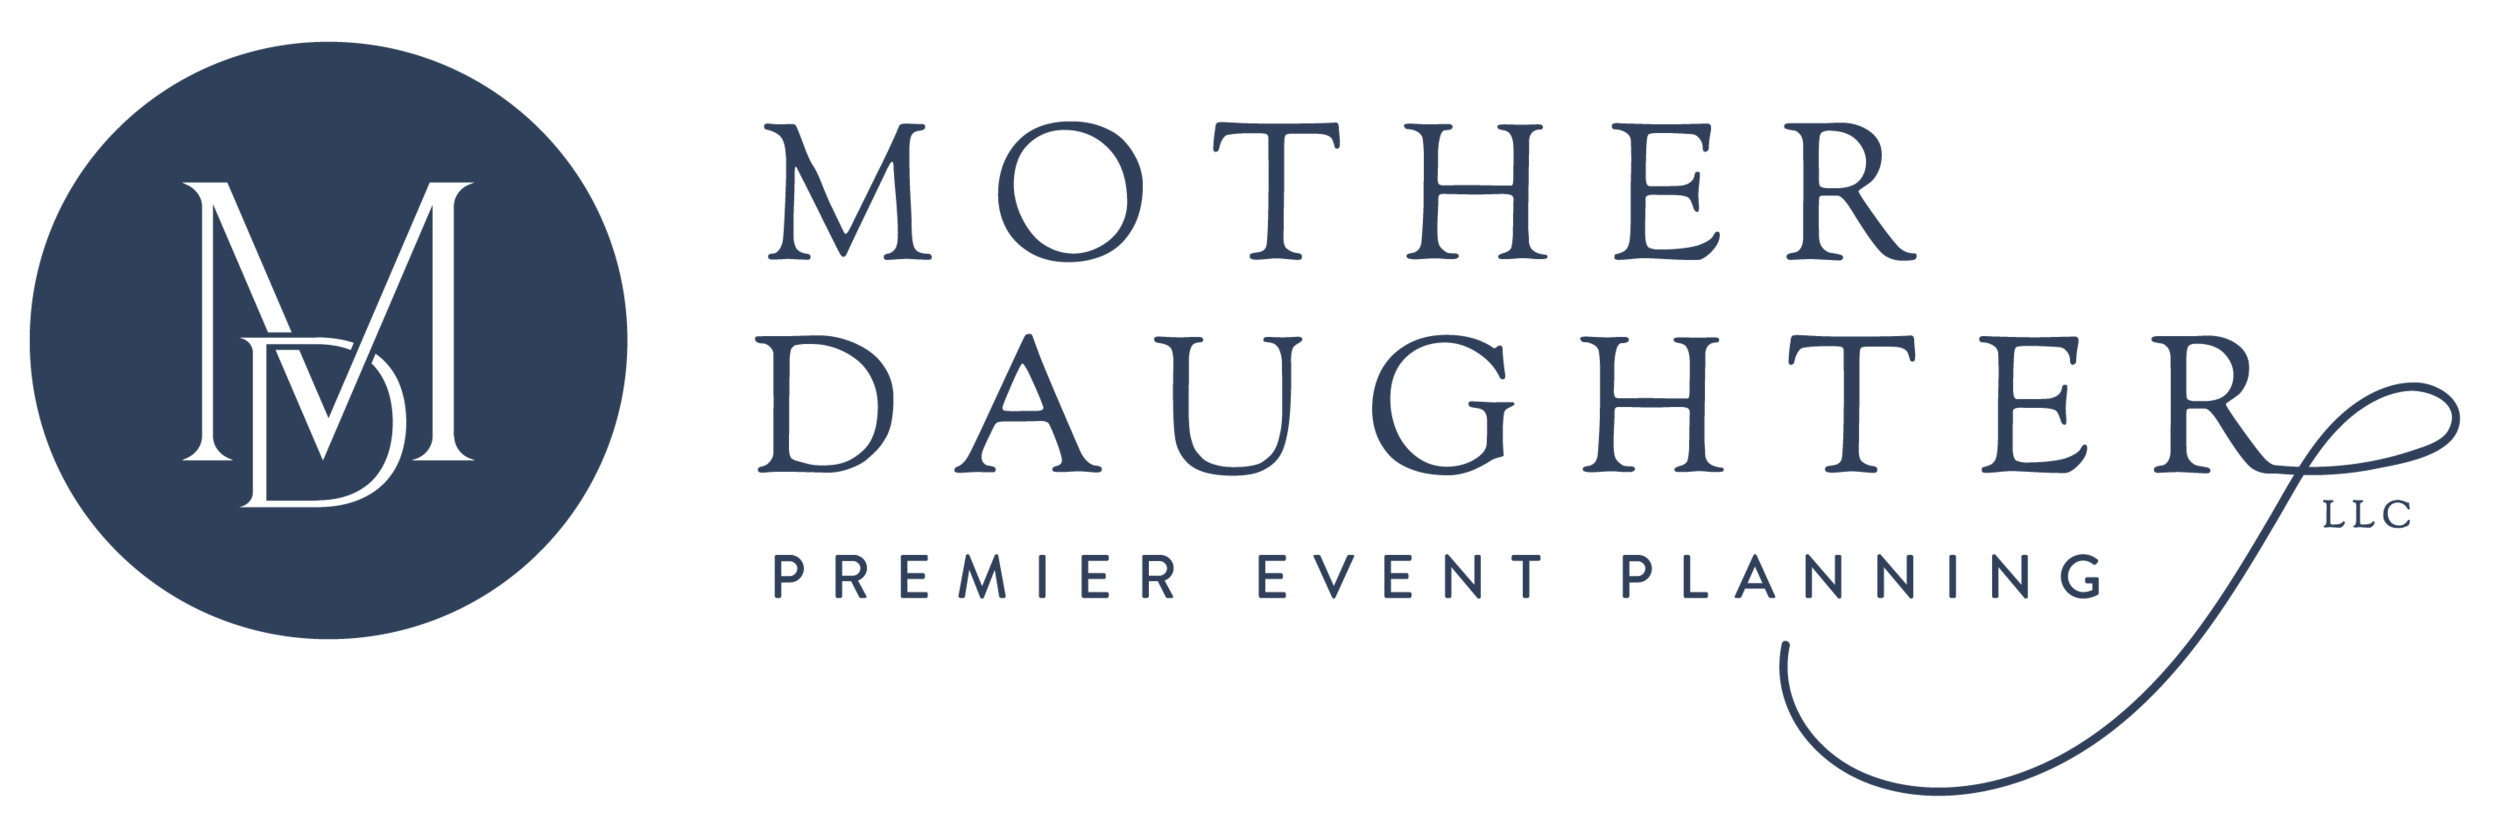 Mother Daughter LLC